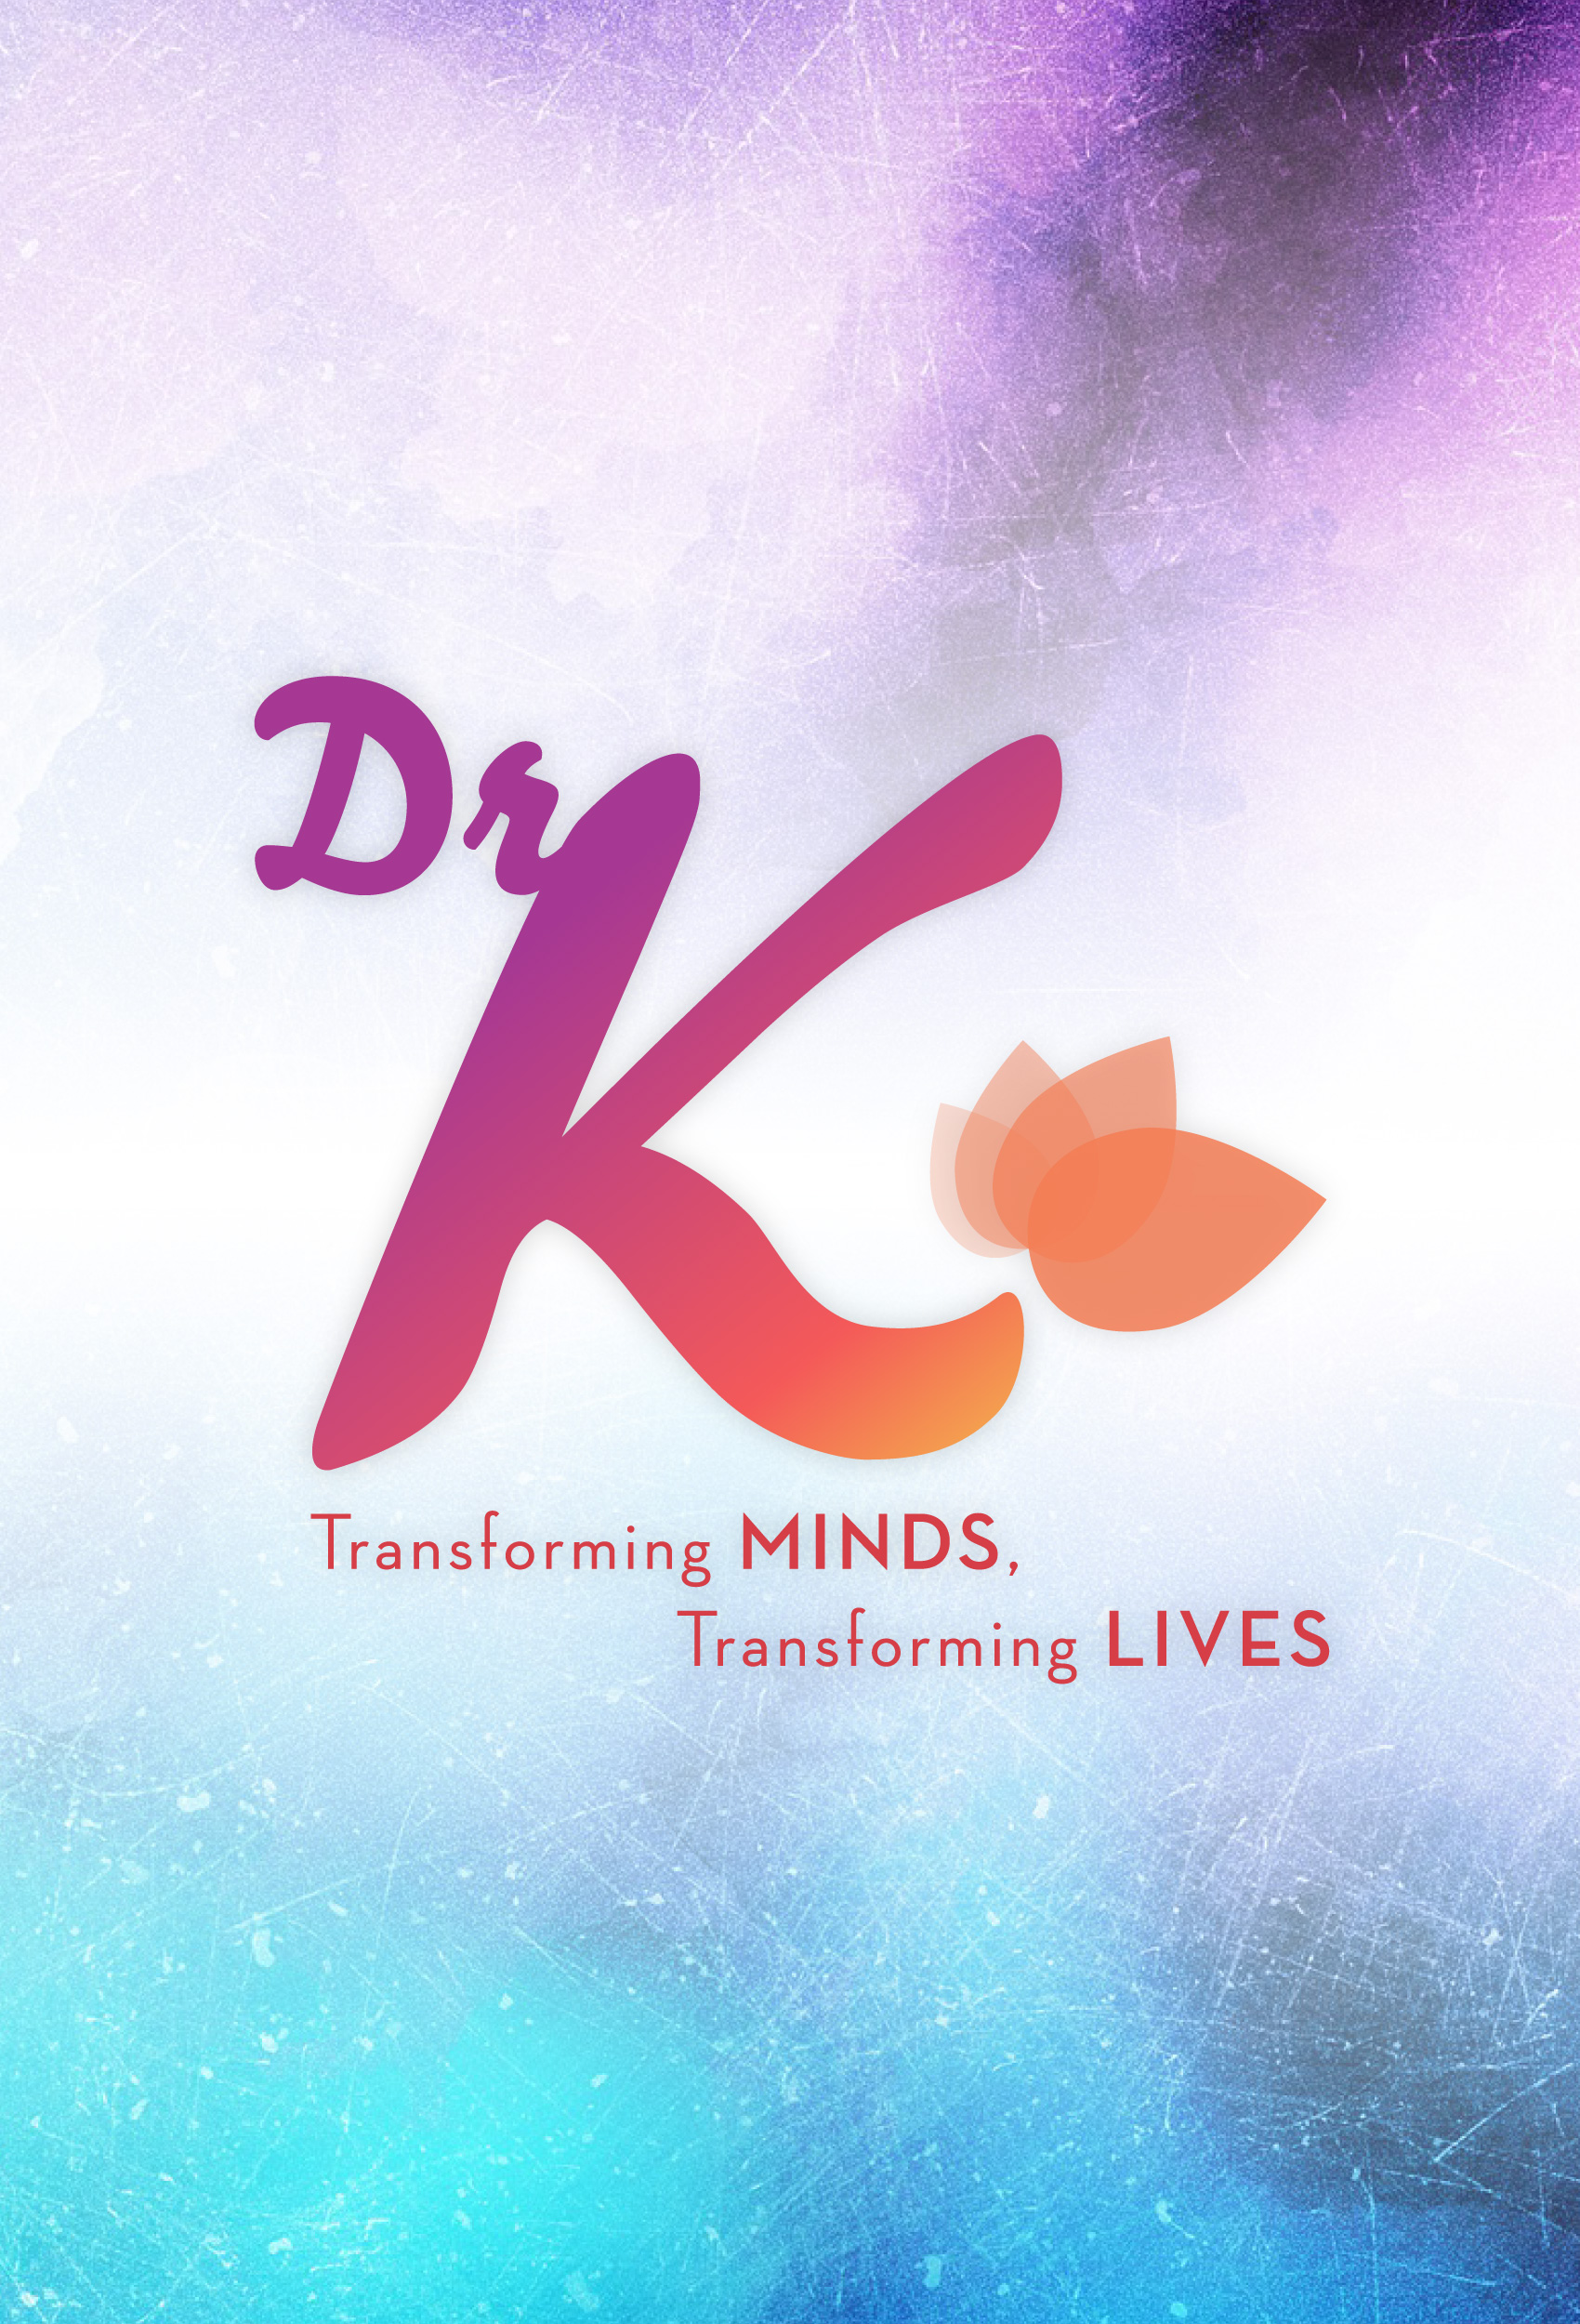 An image of Dr. K's branding